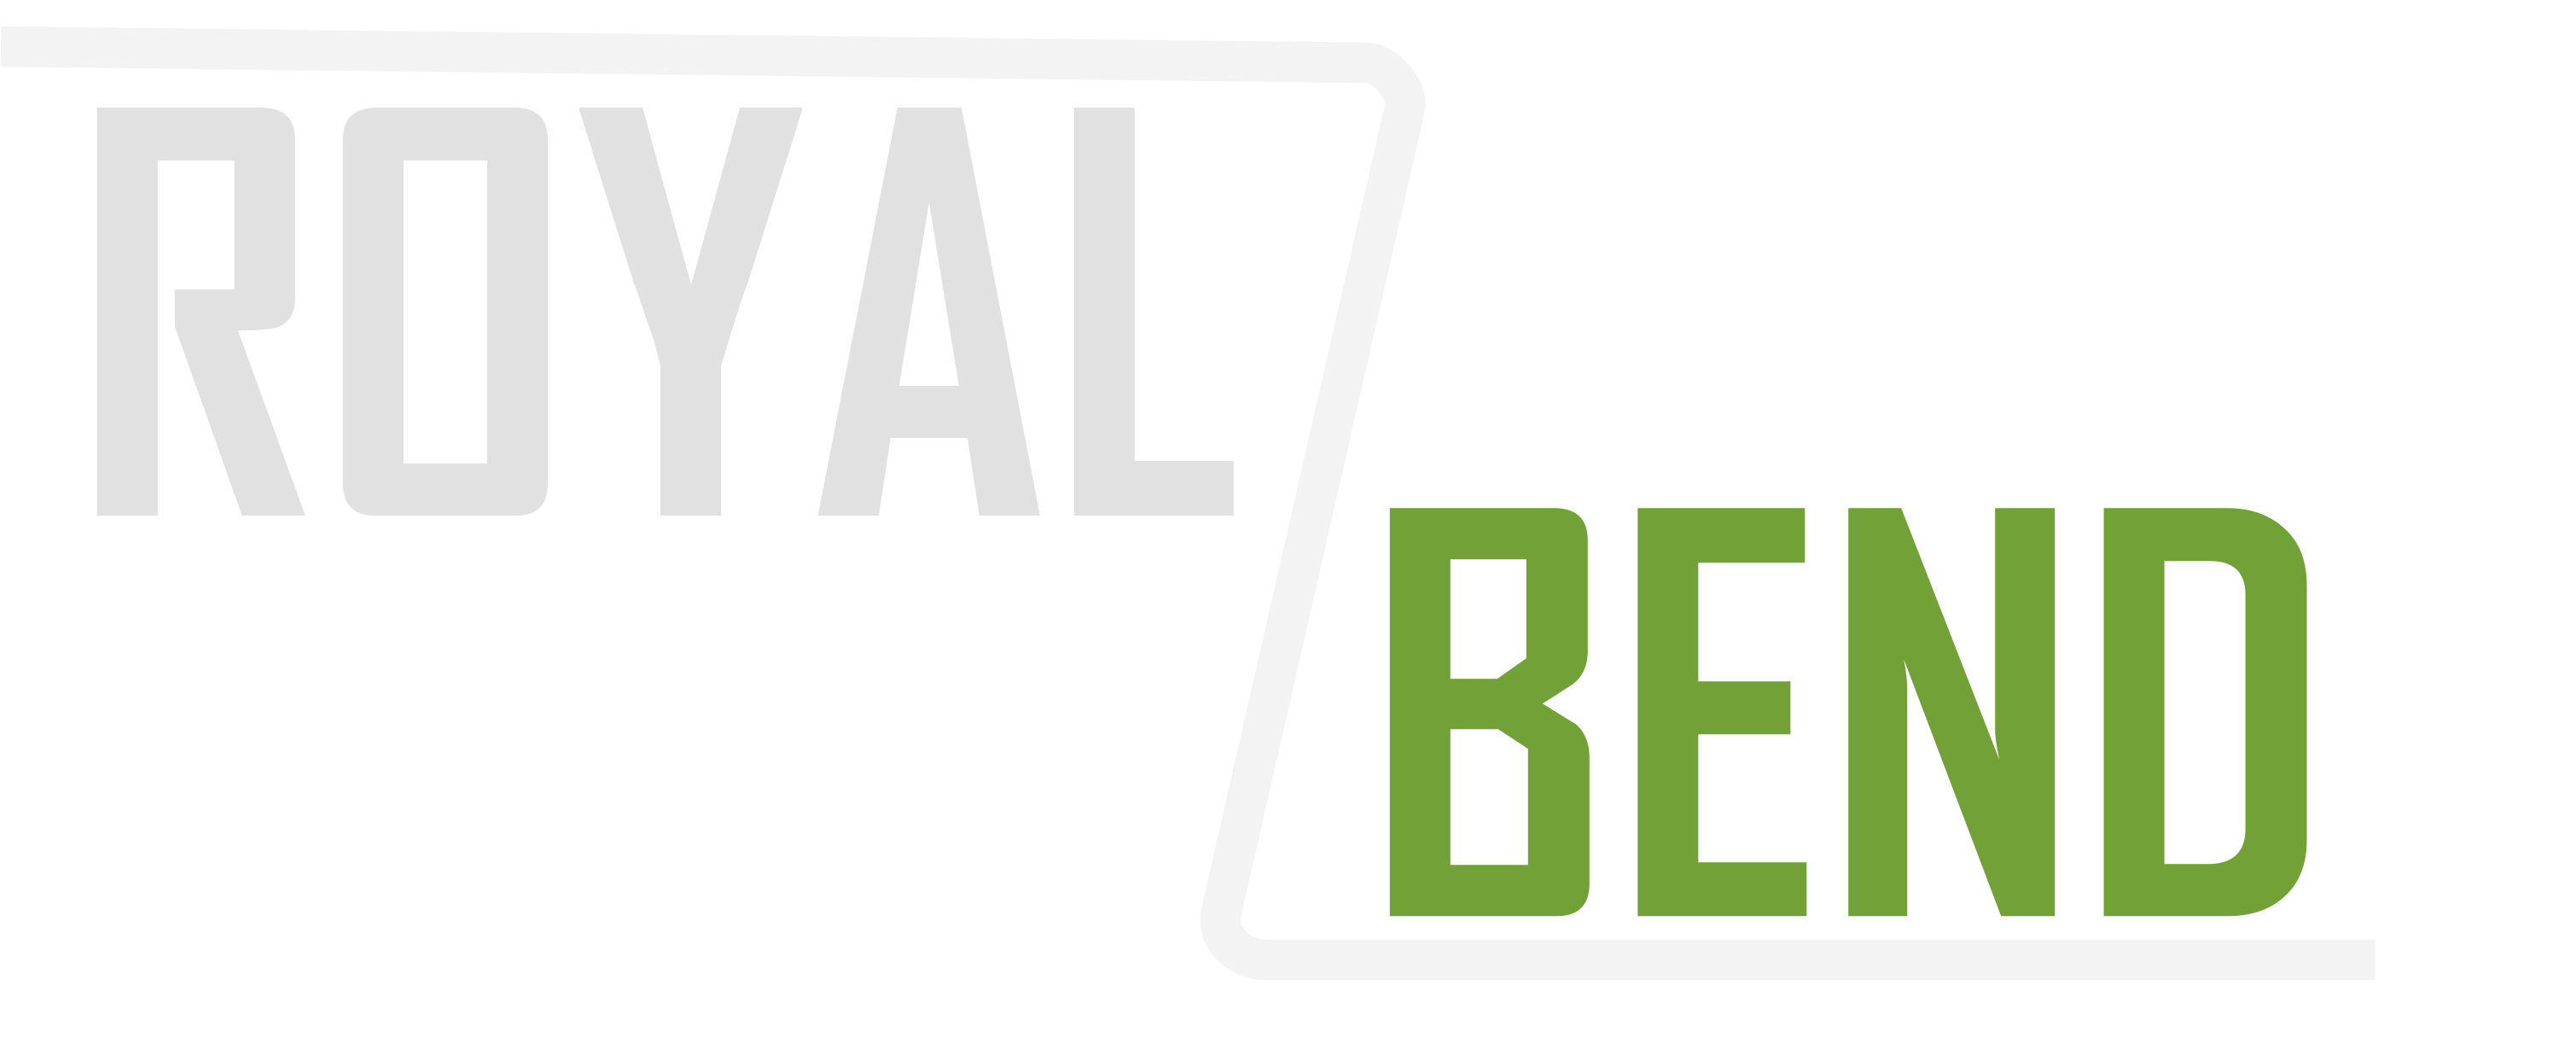 Логотип Роял бенд